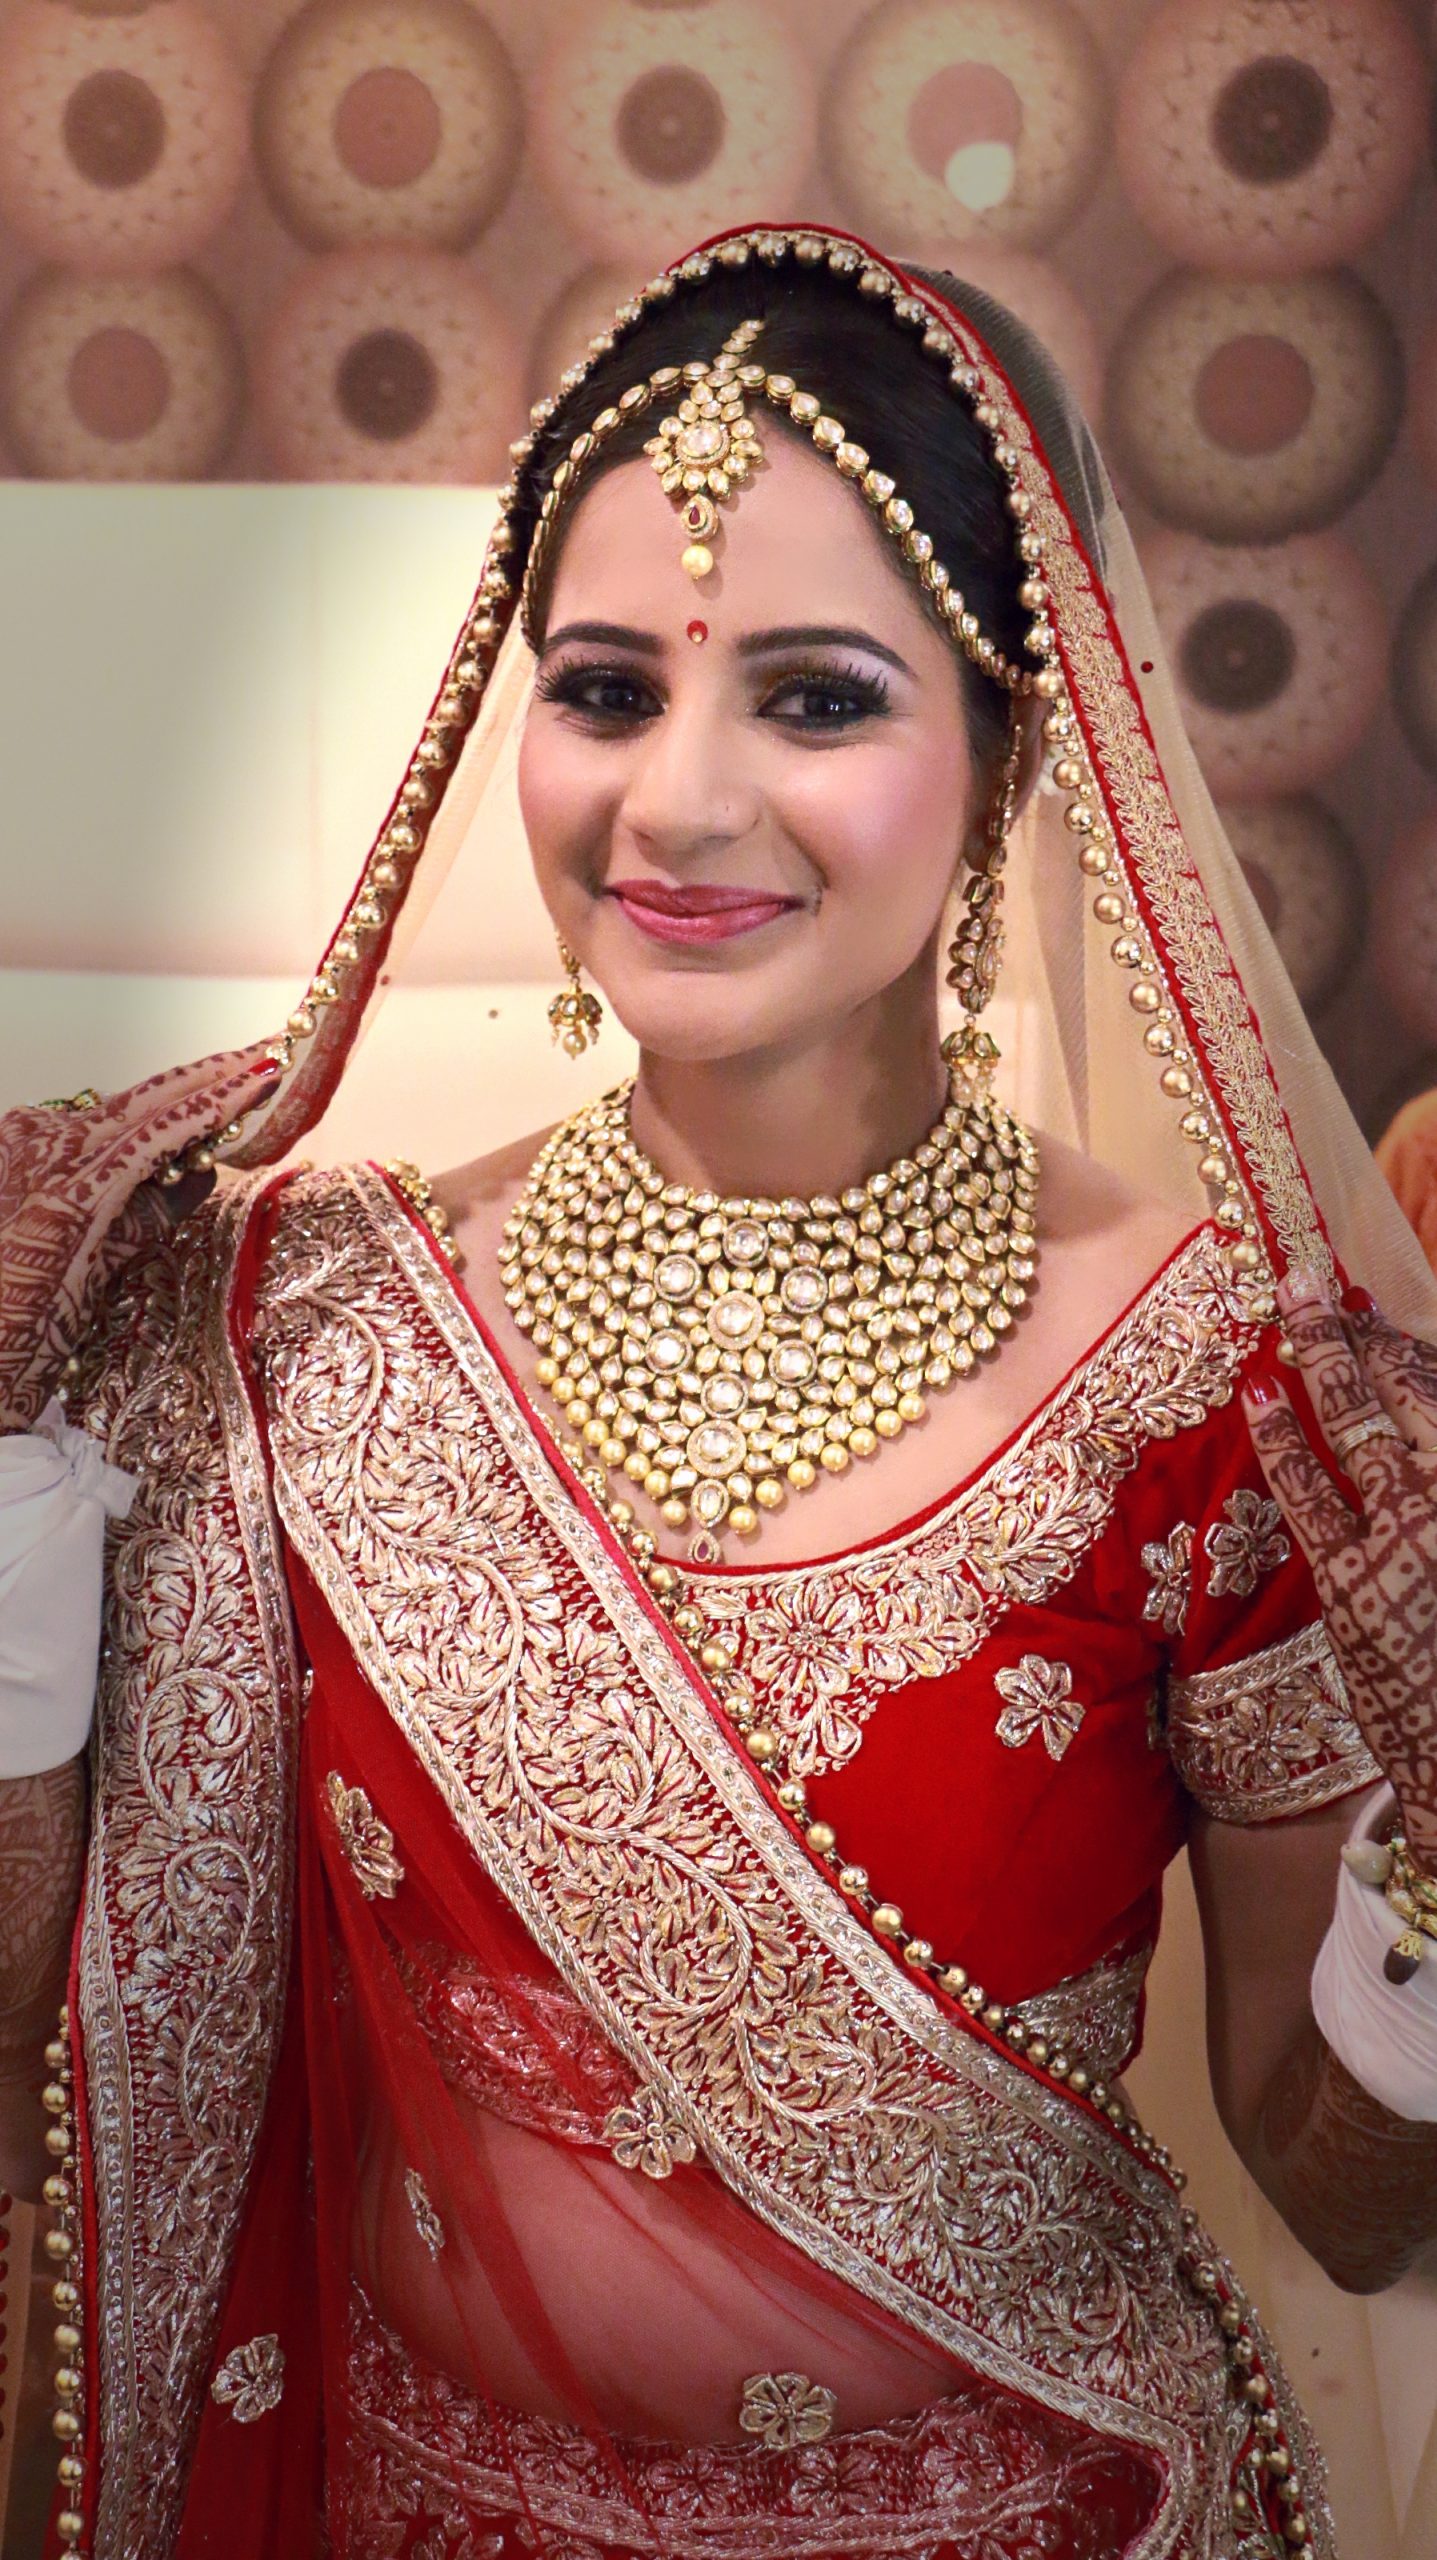 Jaipur makeup artist